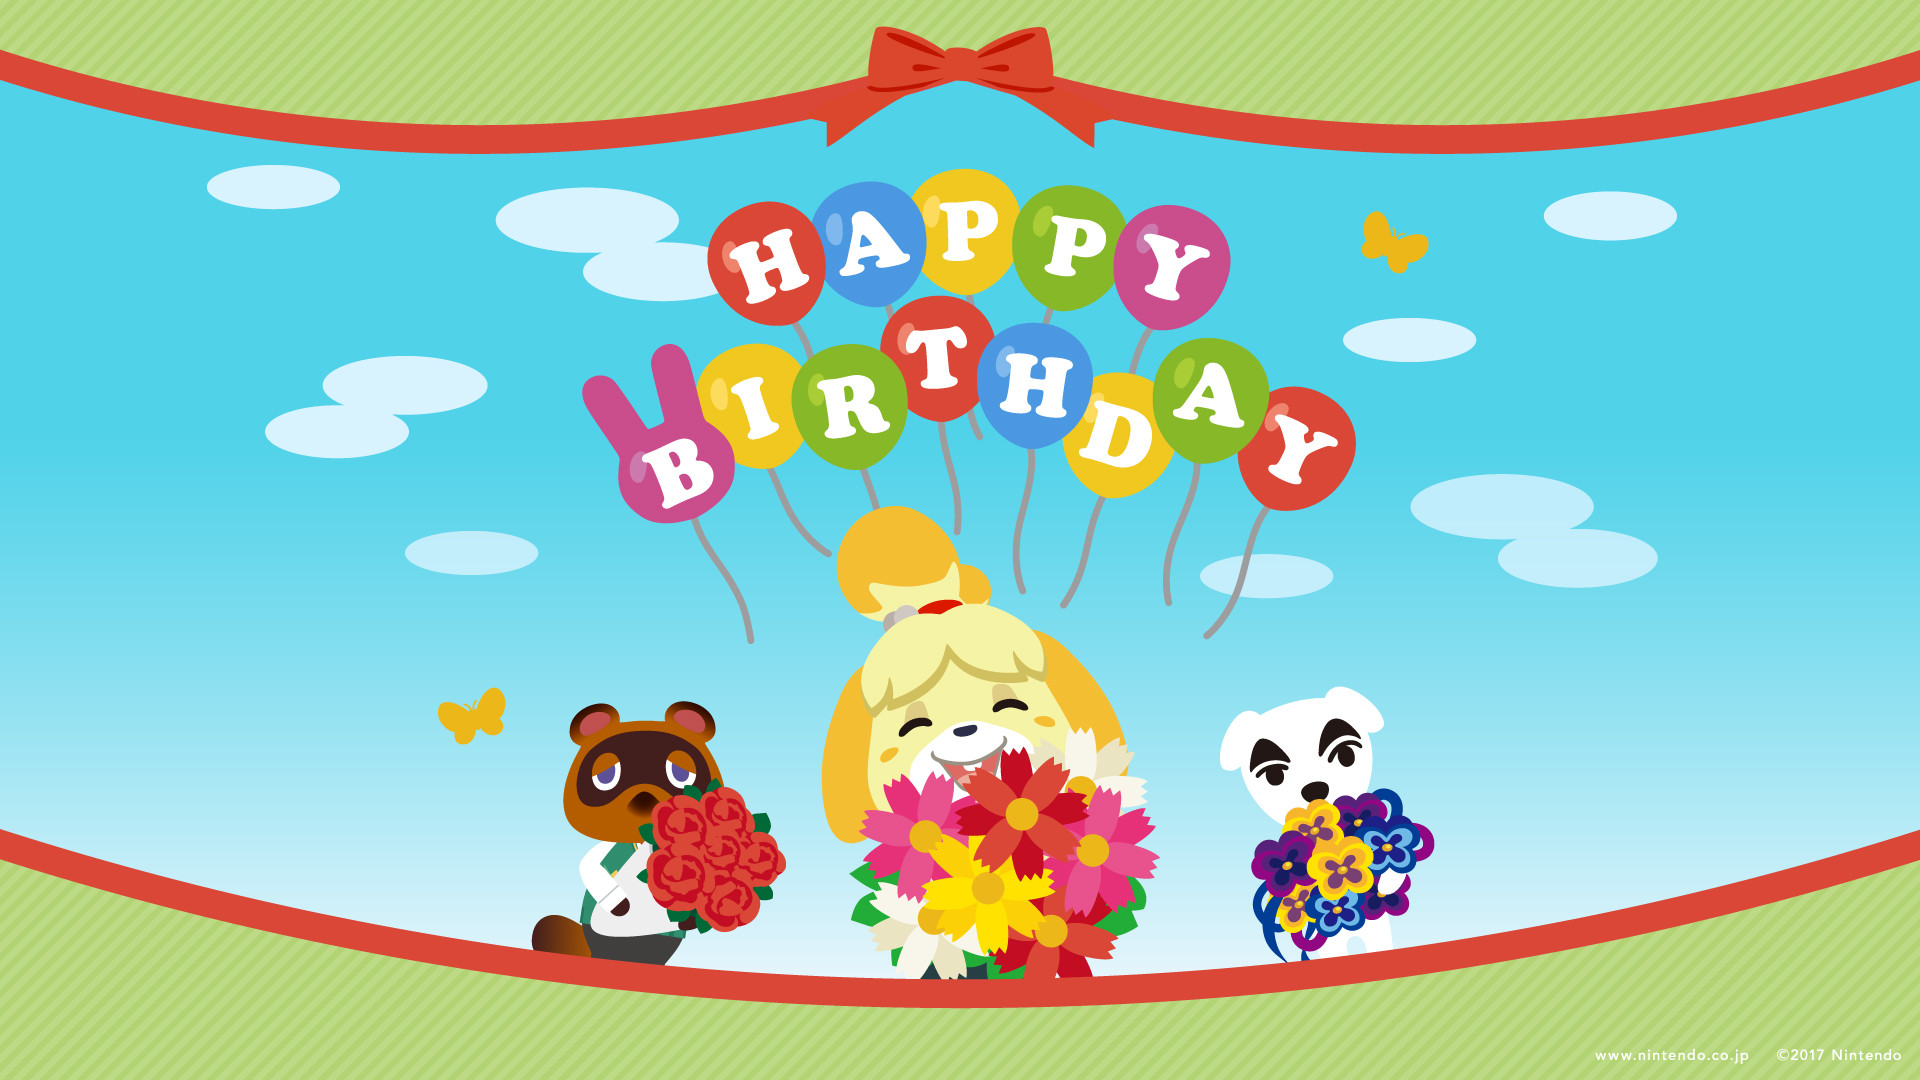 1920x1080 Nintendo releases Animal Crossing "Happy Birthday" wallpapers